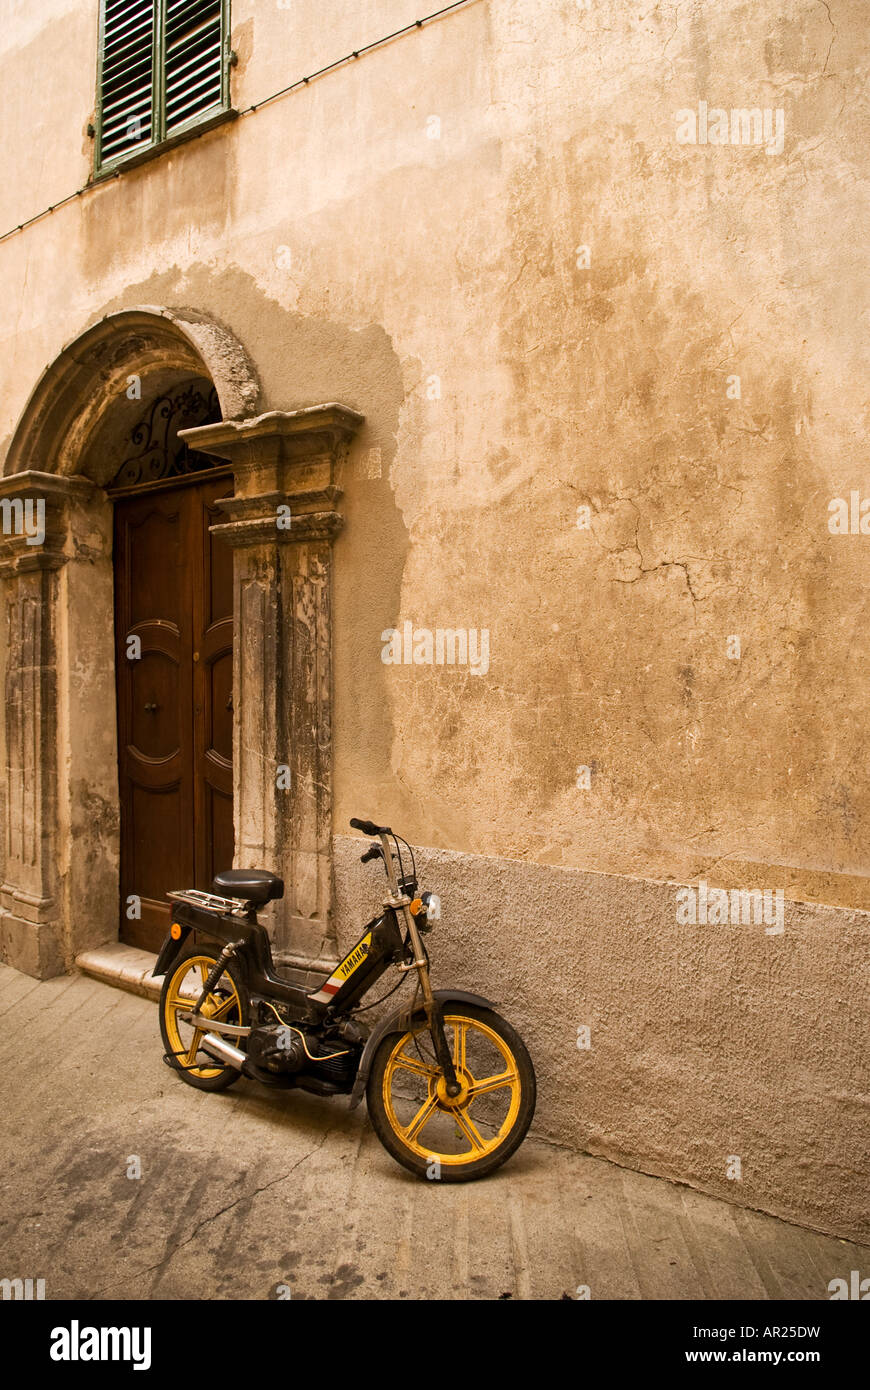 Moped parked outside building, Sospel, Alpes-Maritimes, France Stock Photo